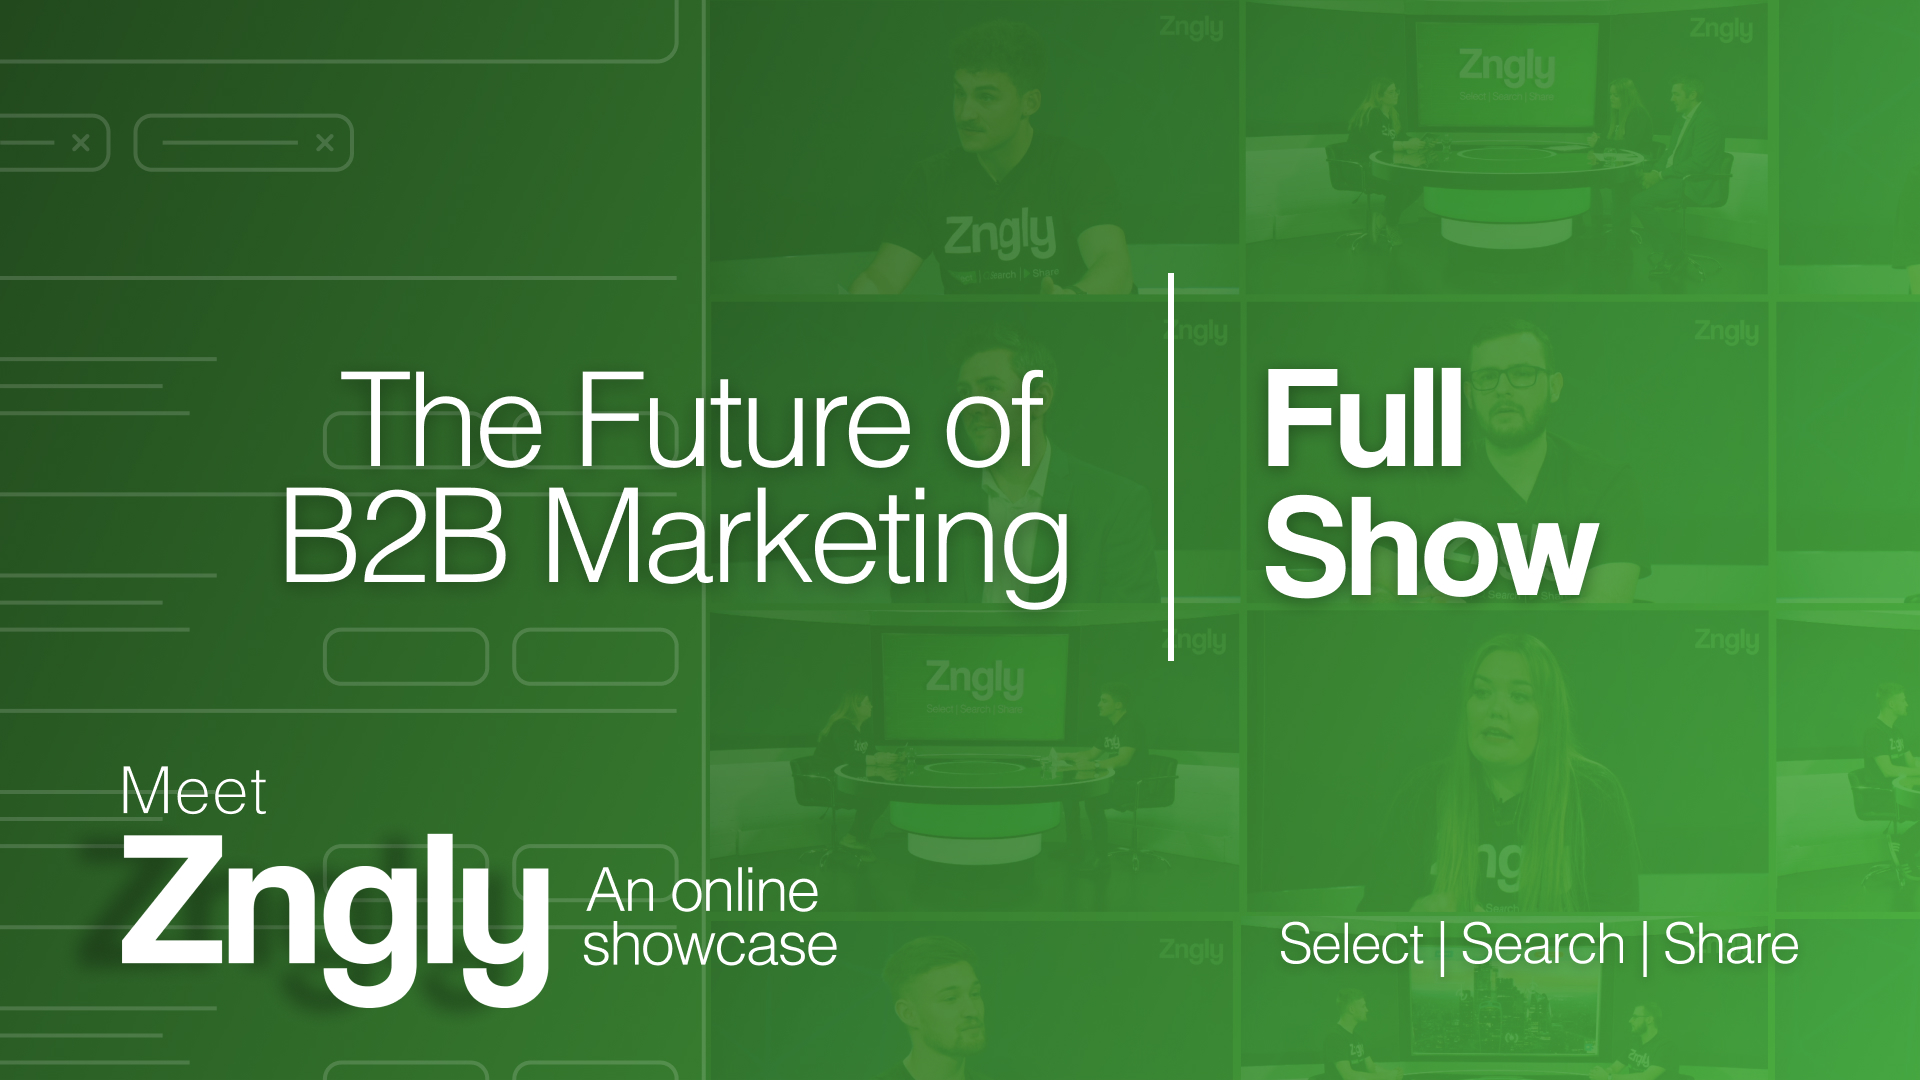 Zngly Showcase: The Future of B2B Marketing